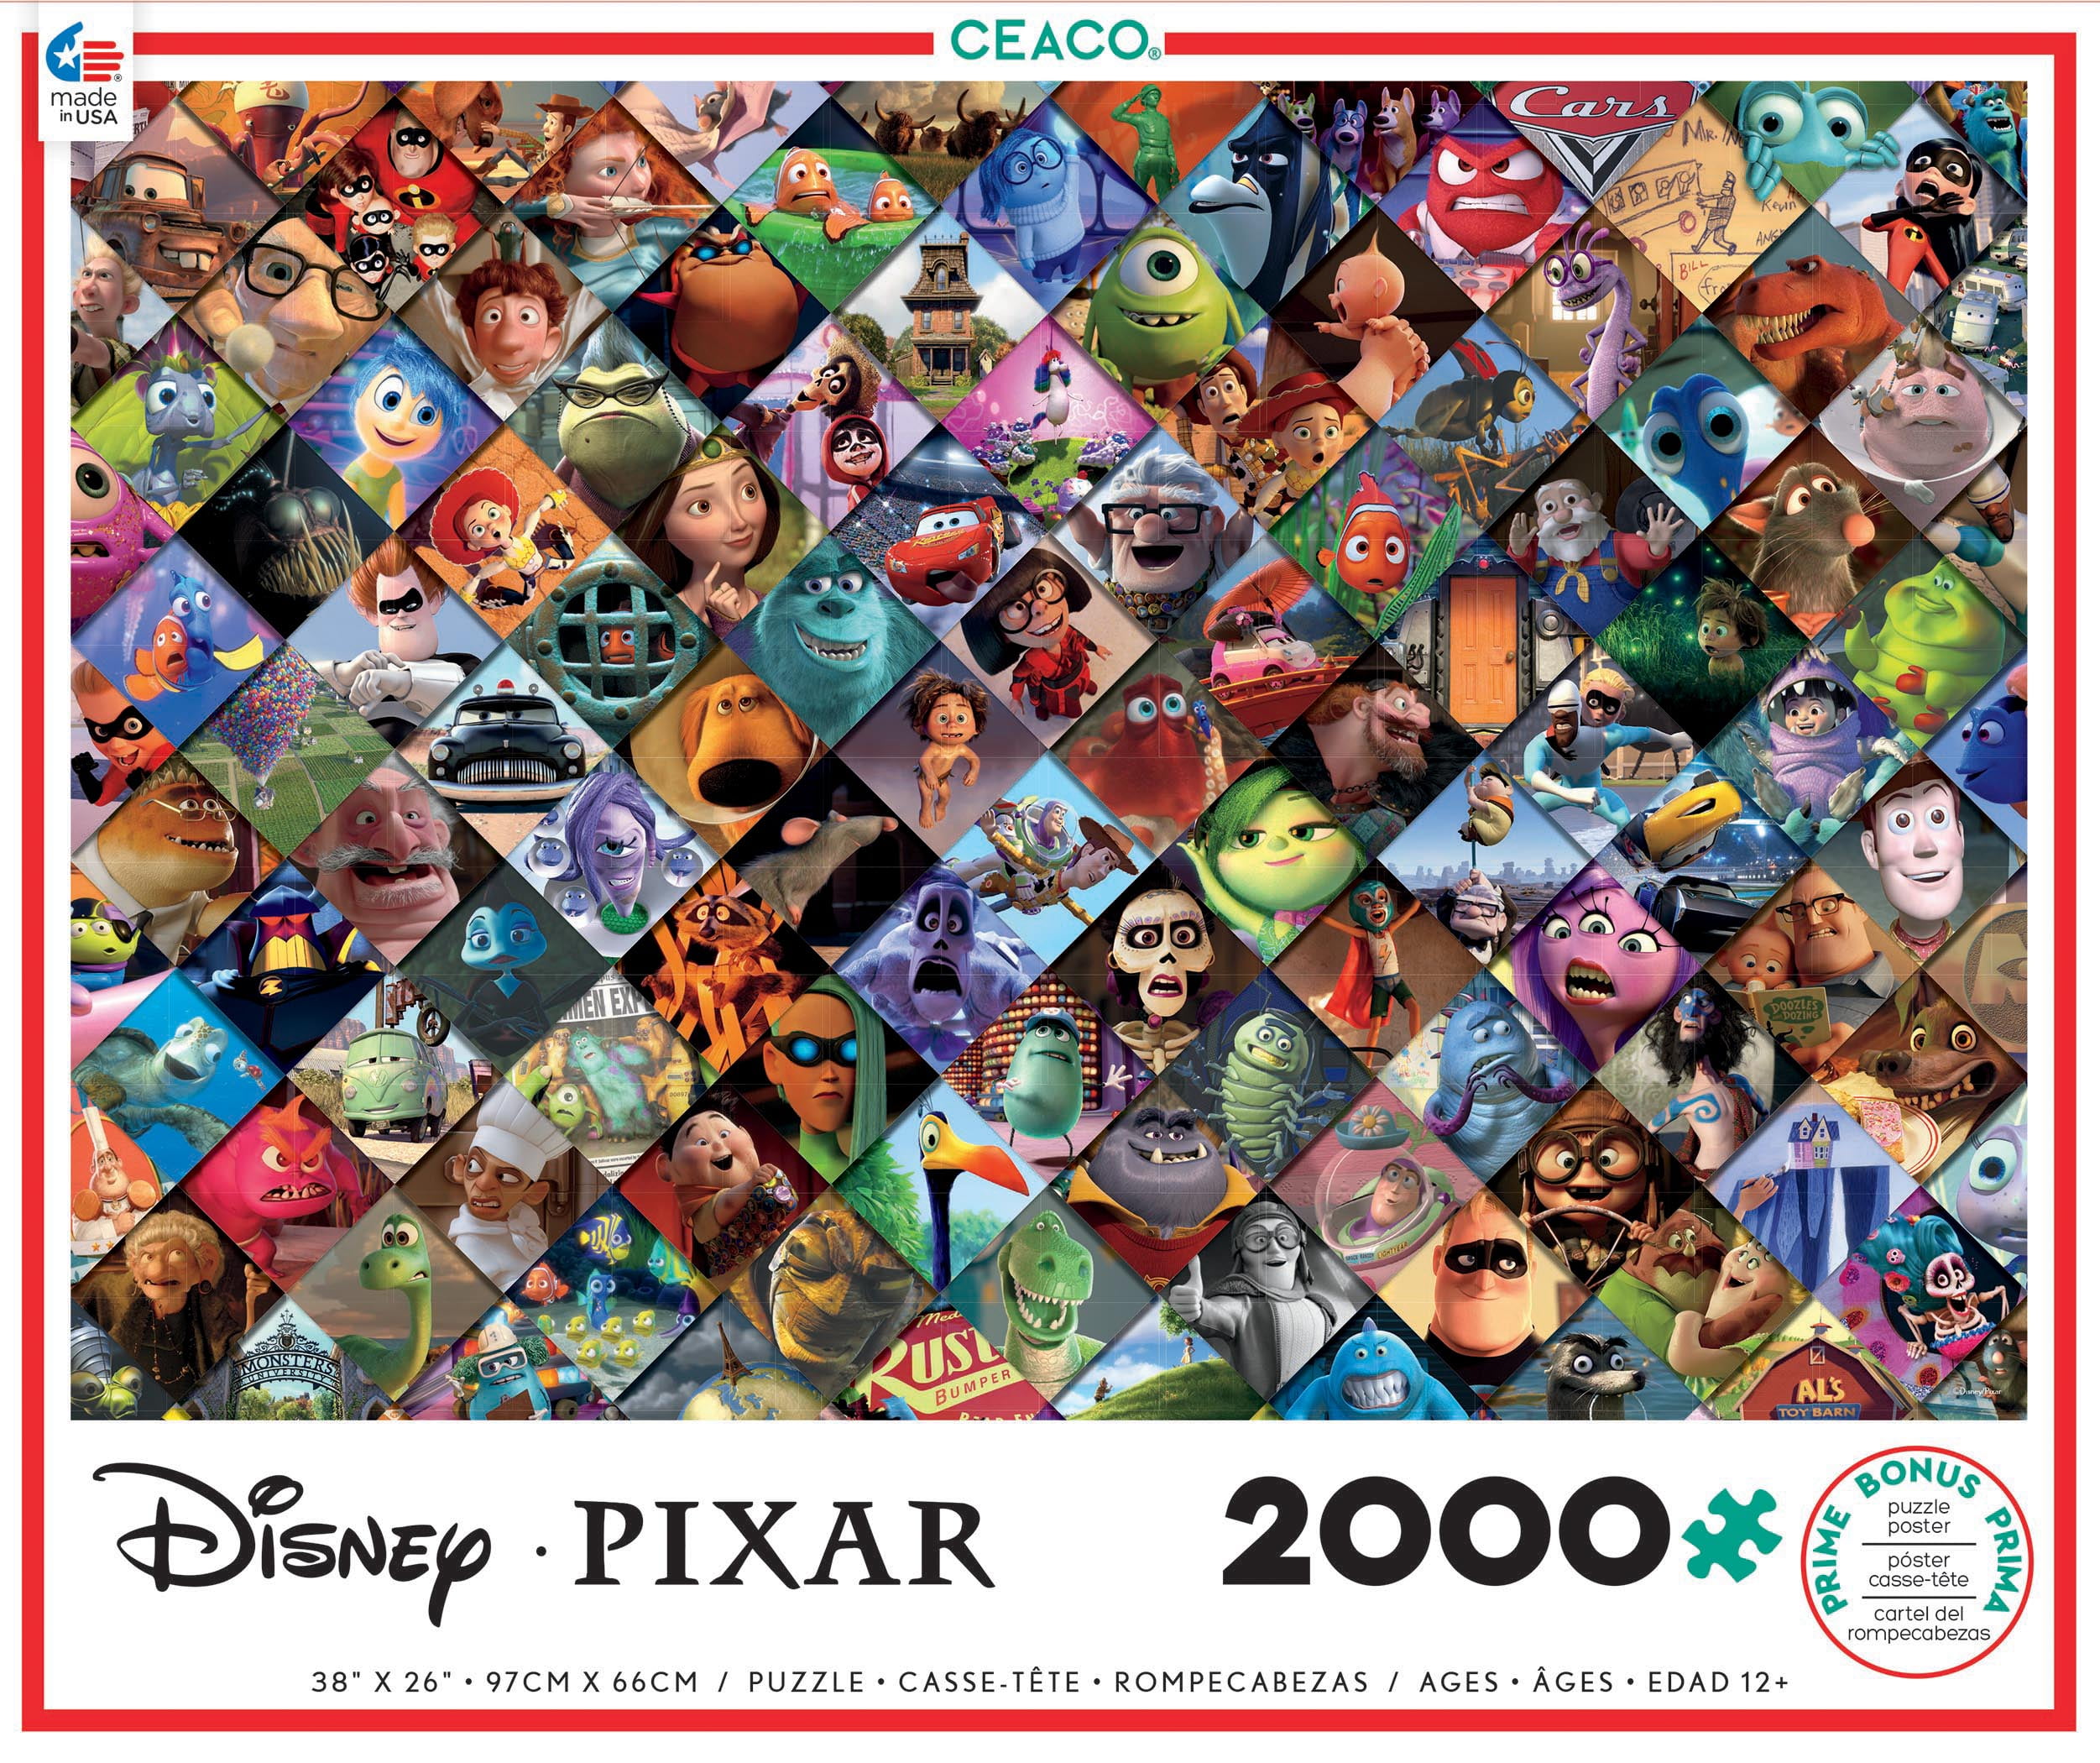 Ceaco 2000PC Assortment Disney/Pixar Pixar Clips